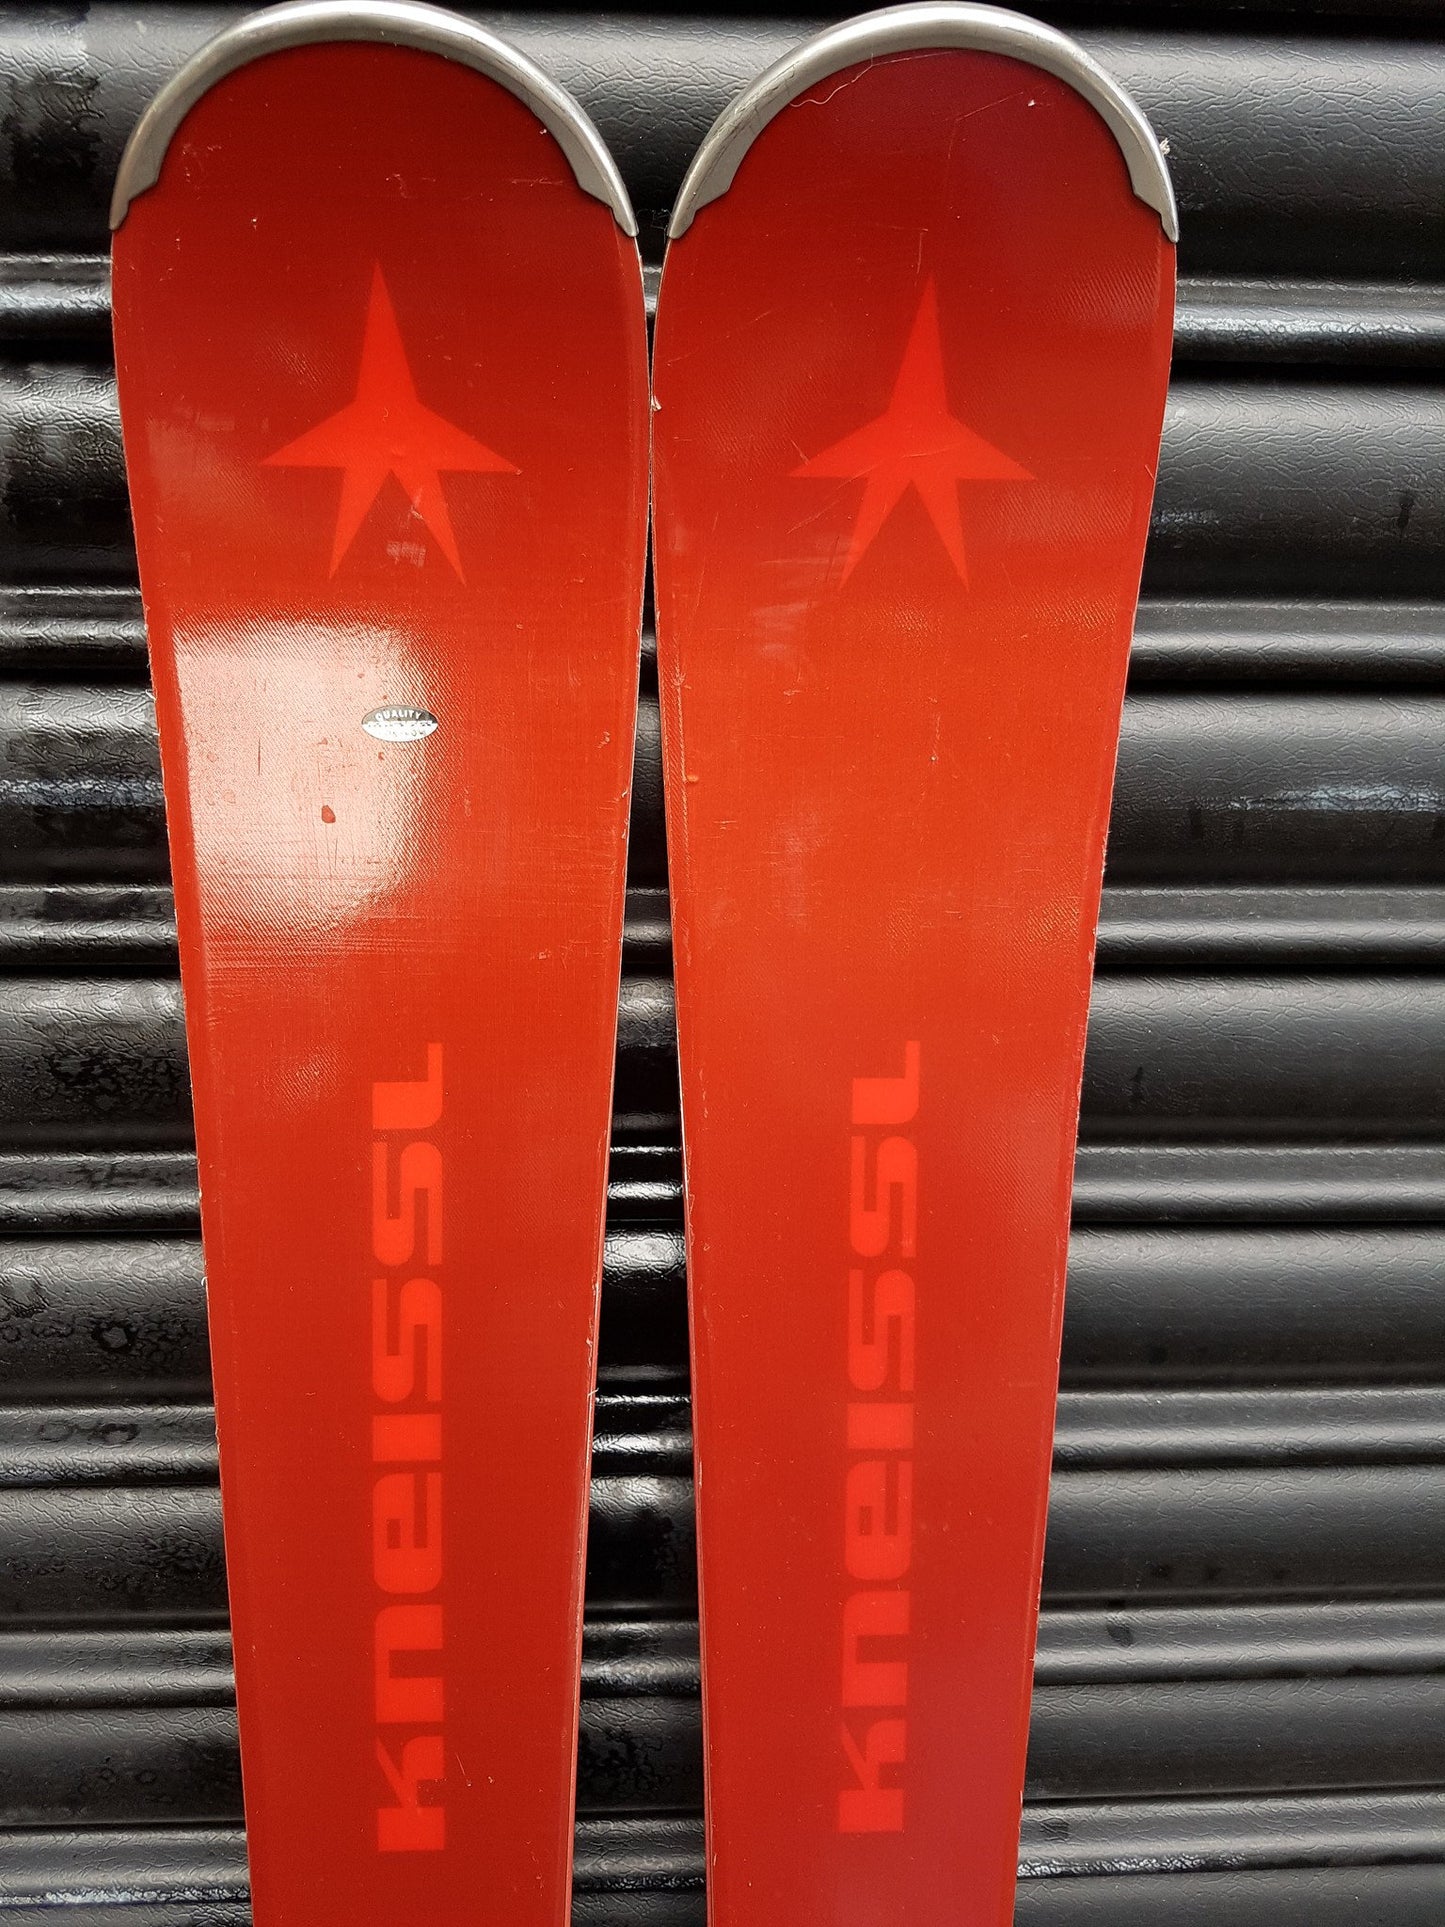 Kneissl Red Star SC 166cm